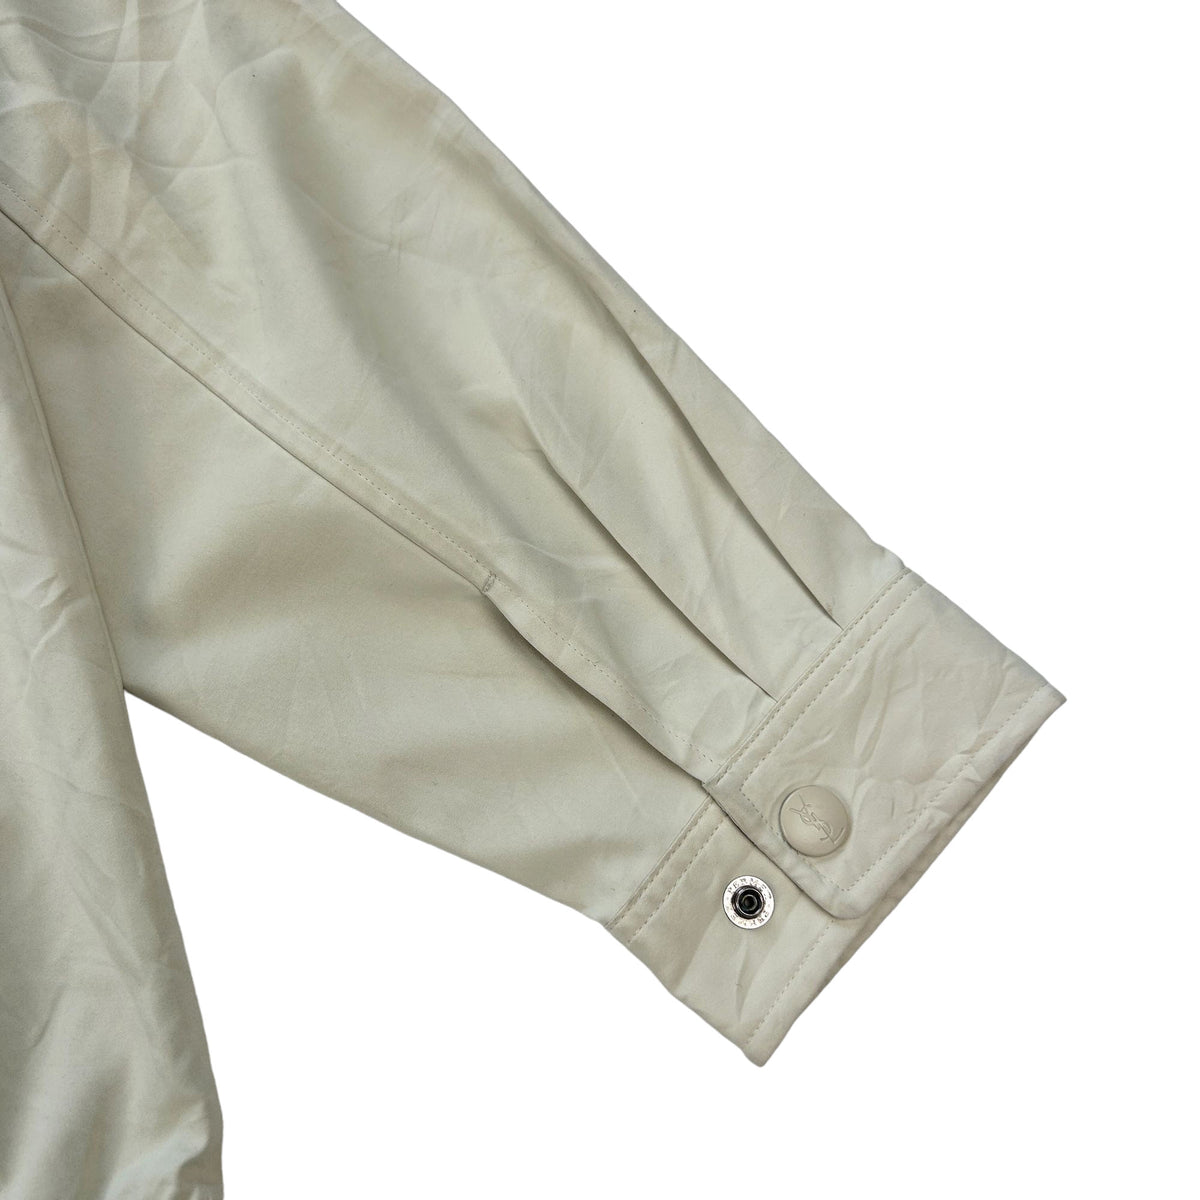 Vintage Yves Saint Laurent Harrington Jacket Size L